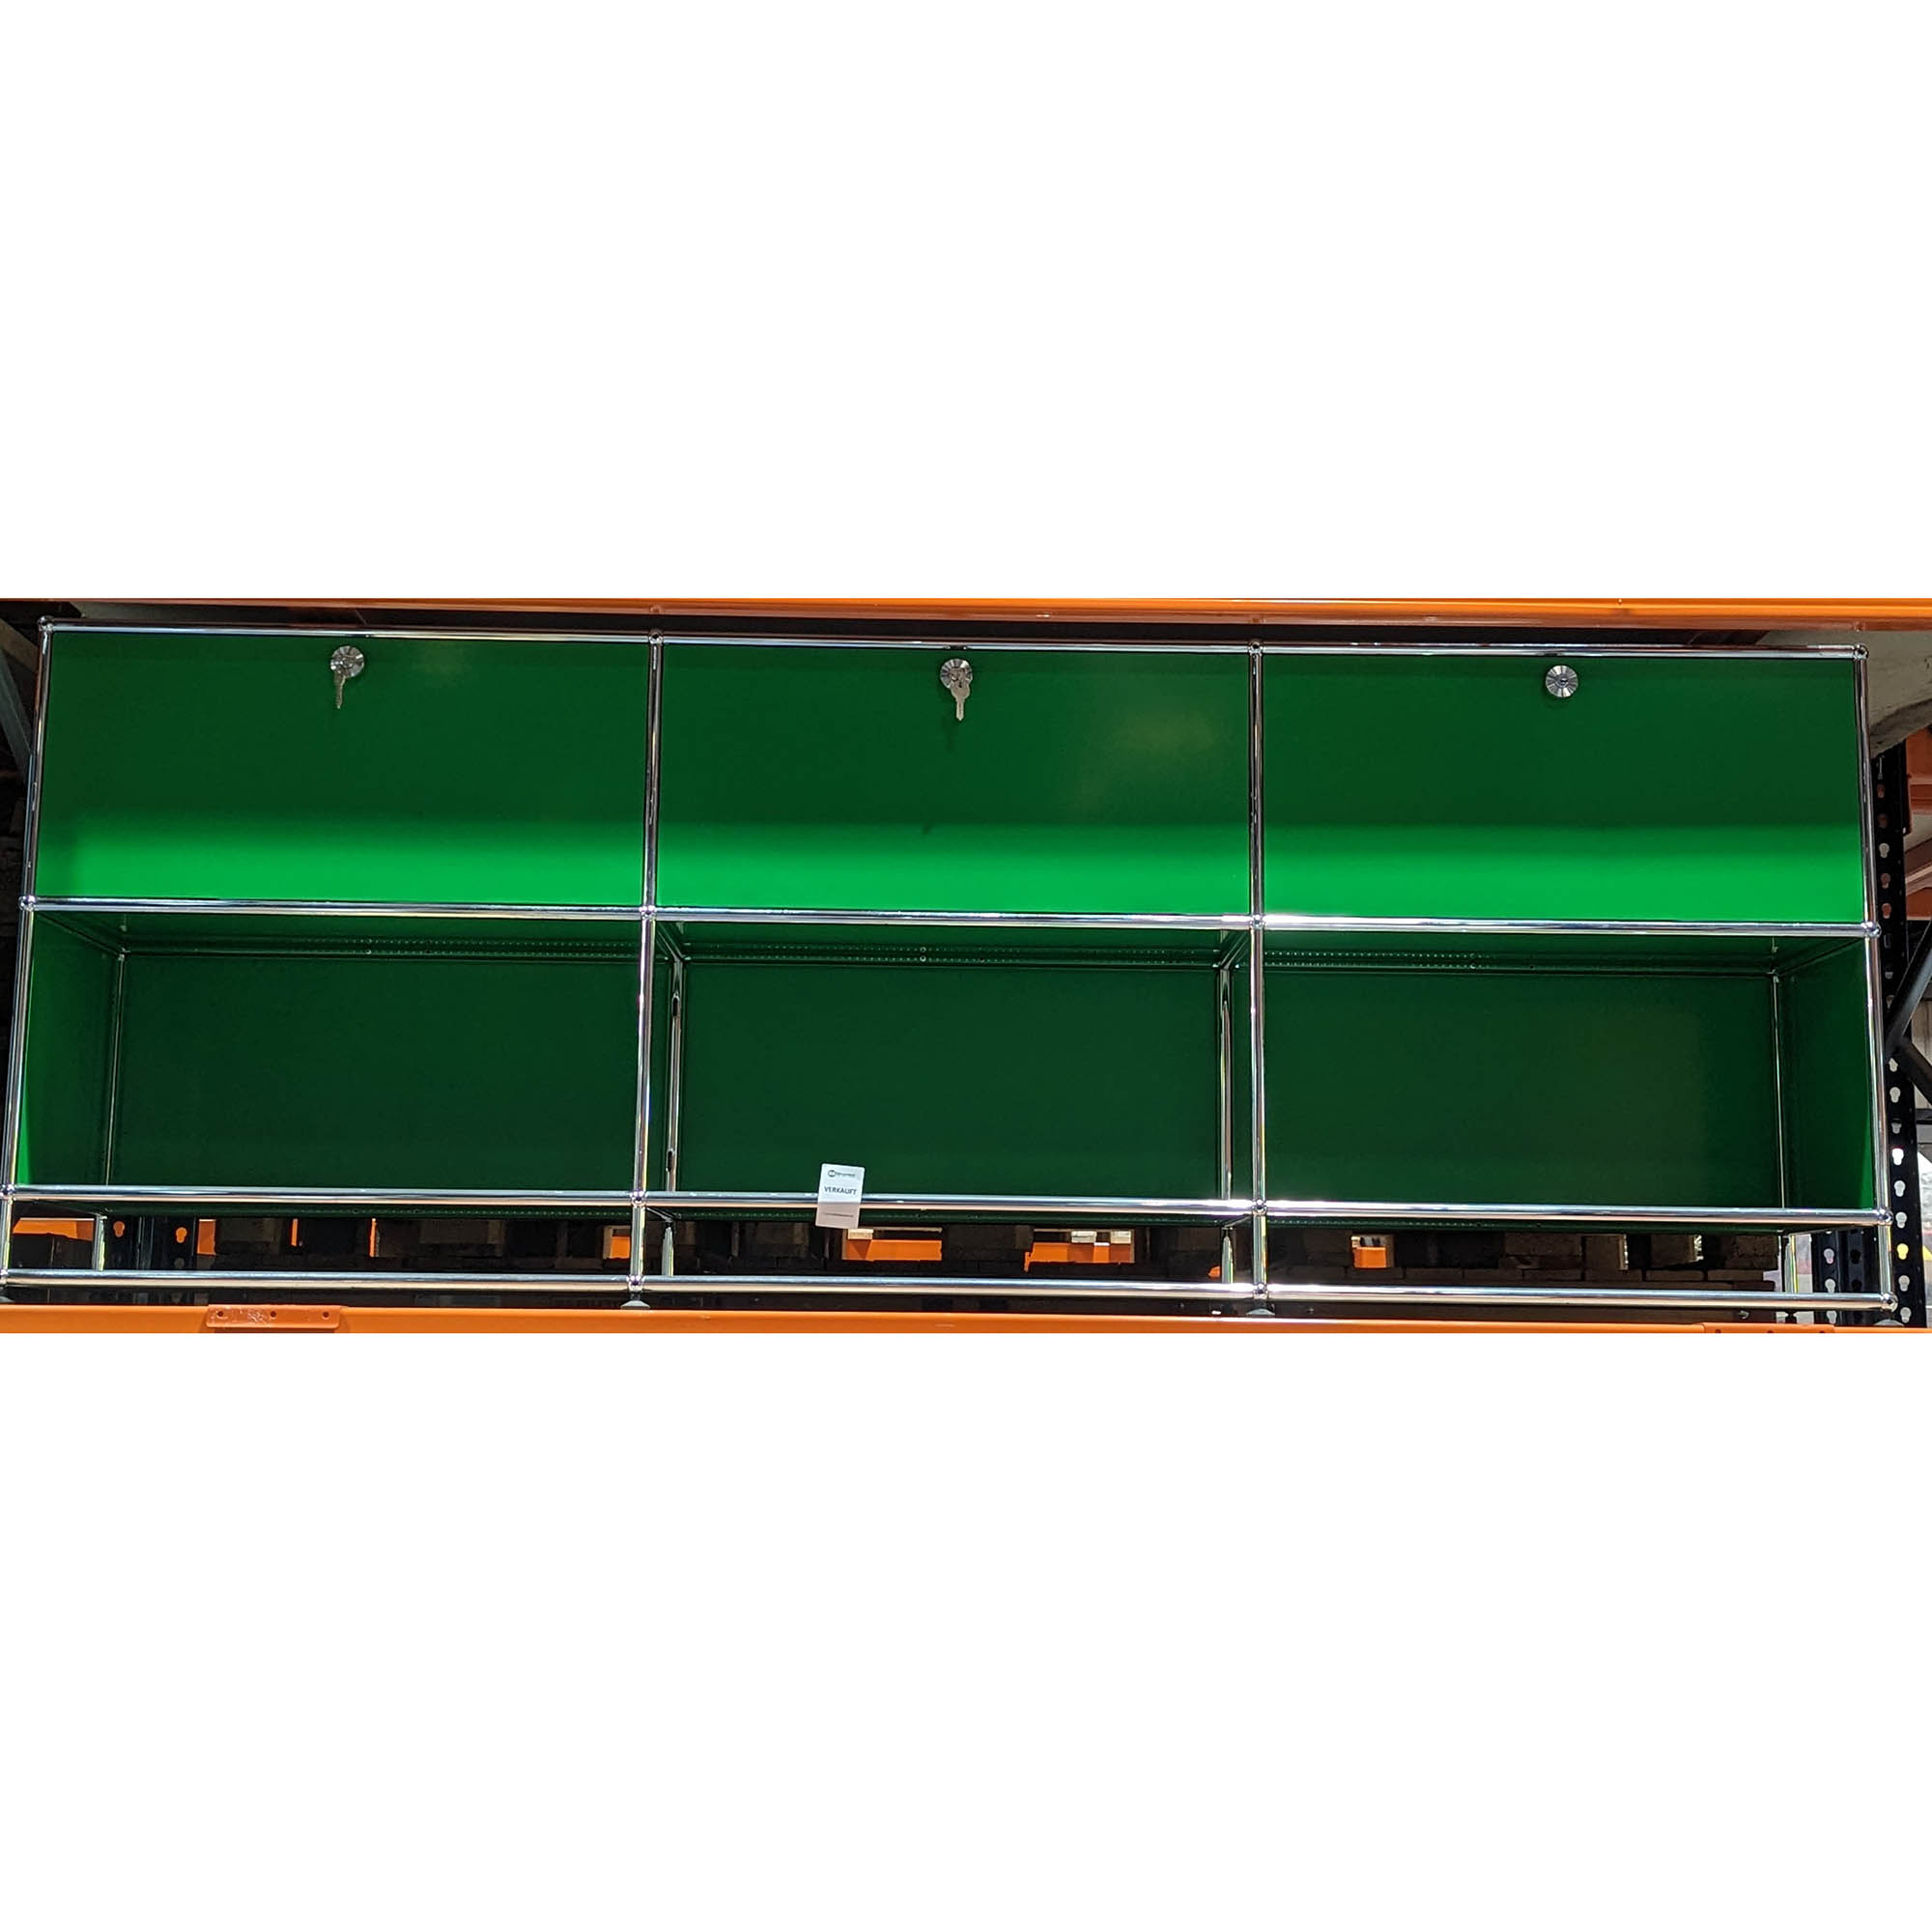 MUSTERHAUS: USM Haller Sideboard grün 2OH - 3 Klappen - 3 offene Felder - Sockel - 225 cm